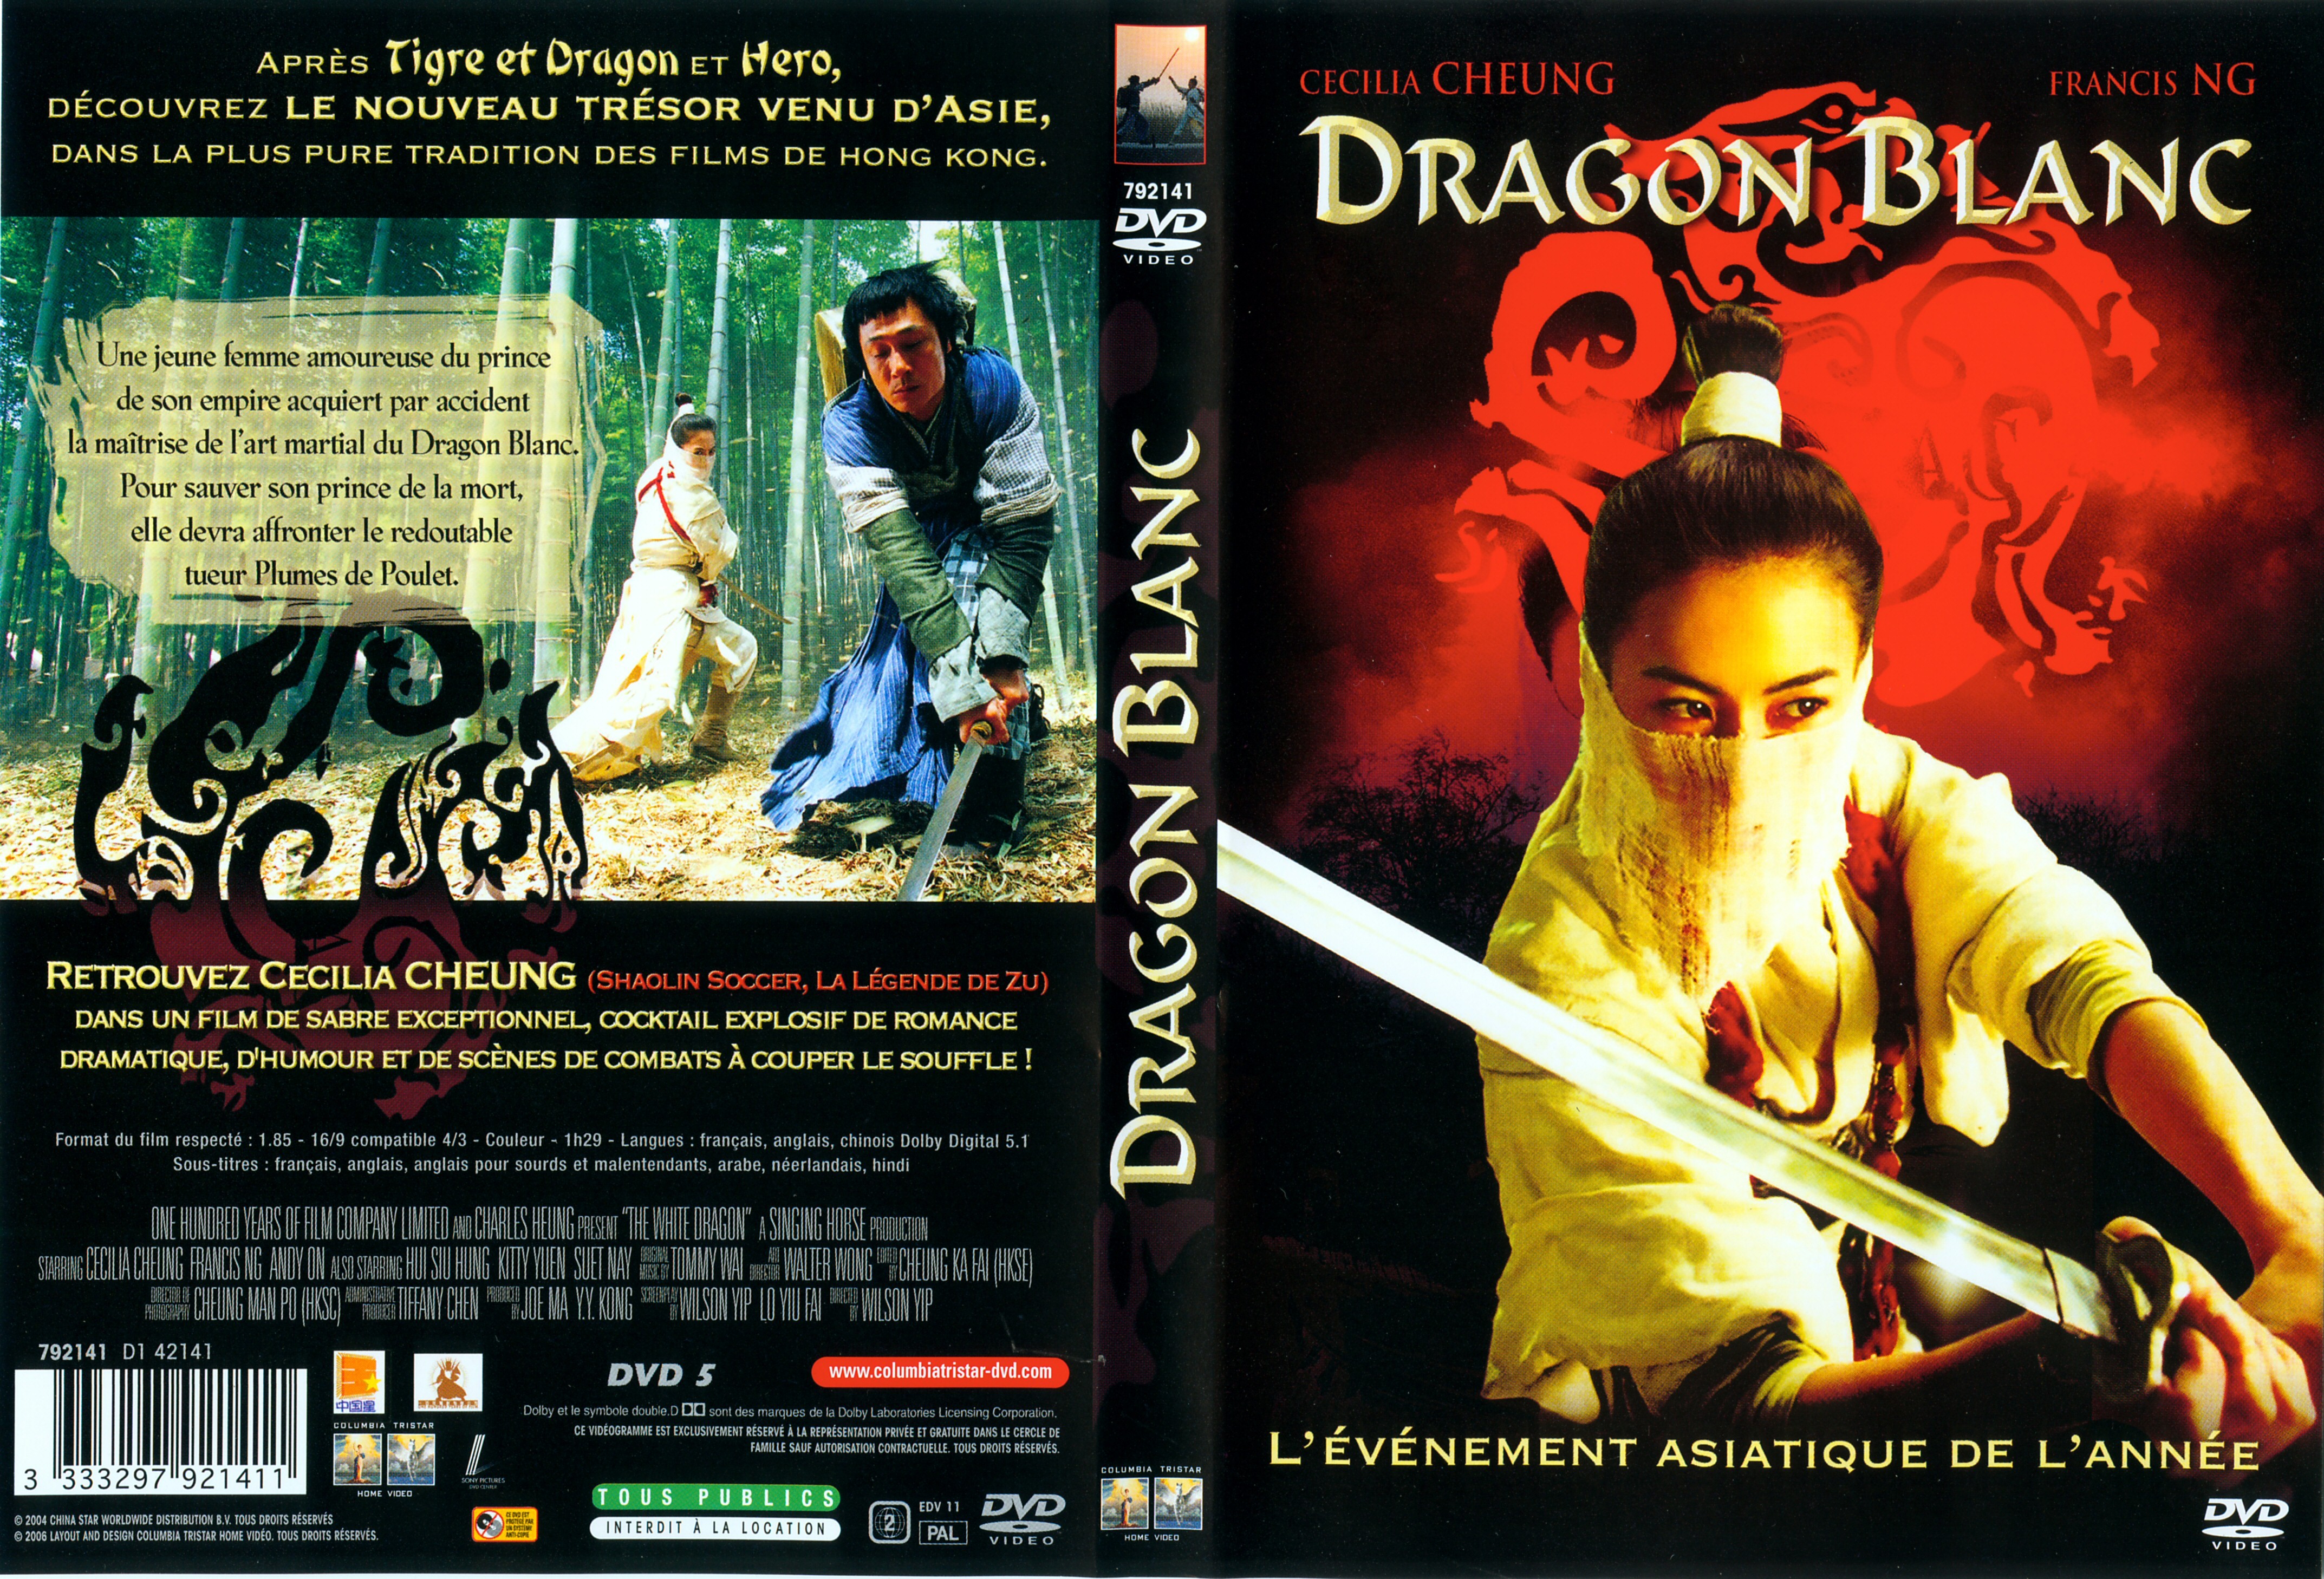 Jaquette DVD Dragon blanc